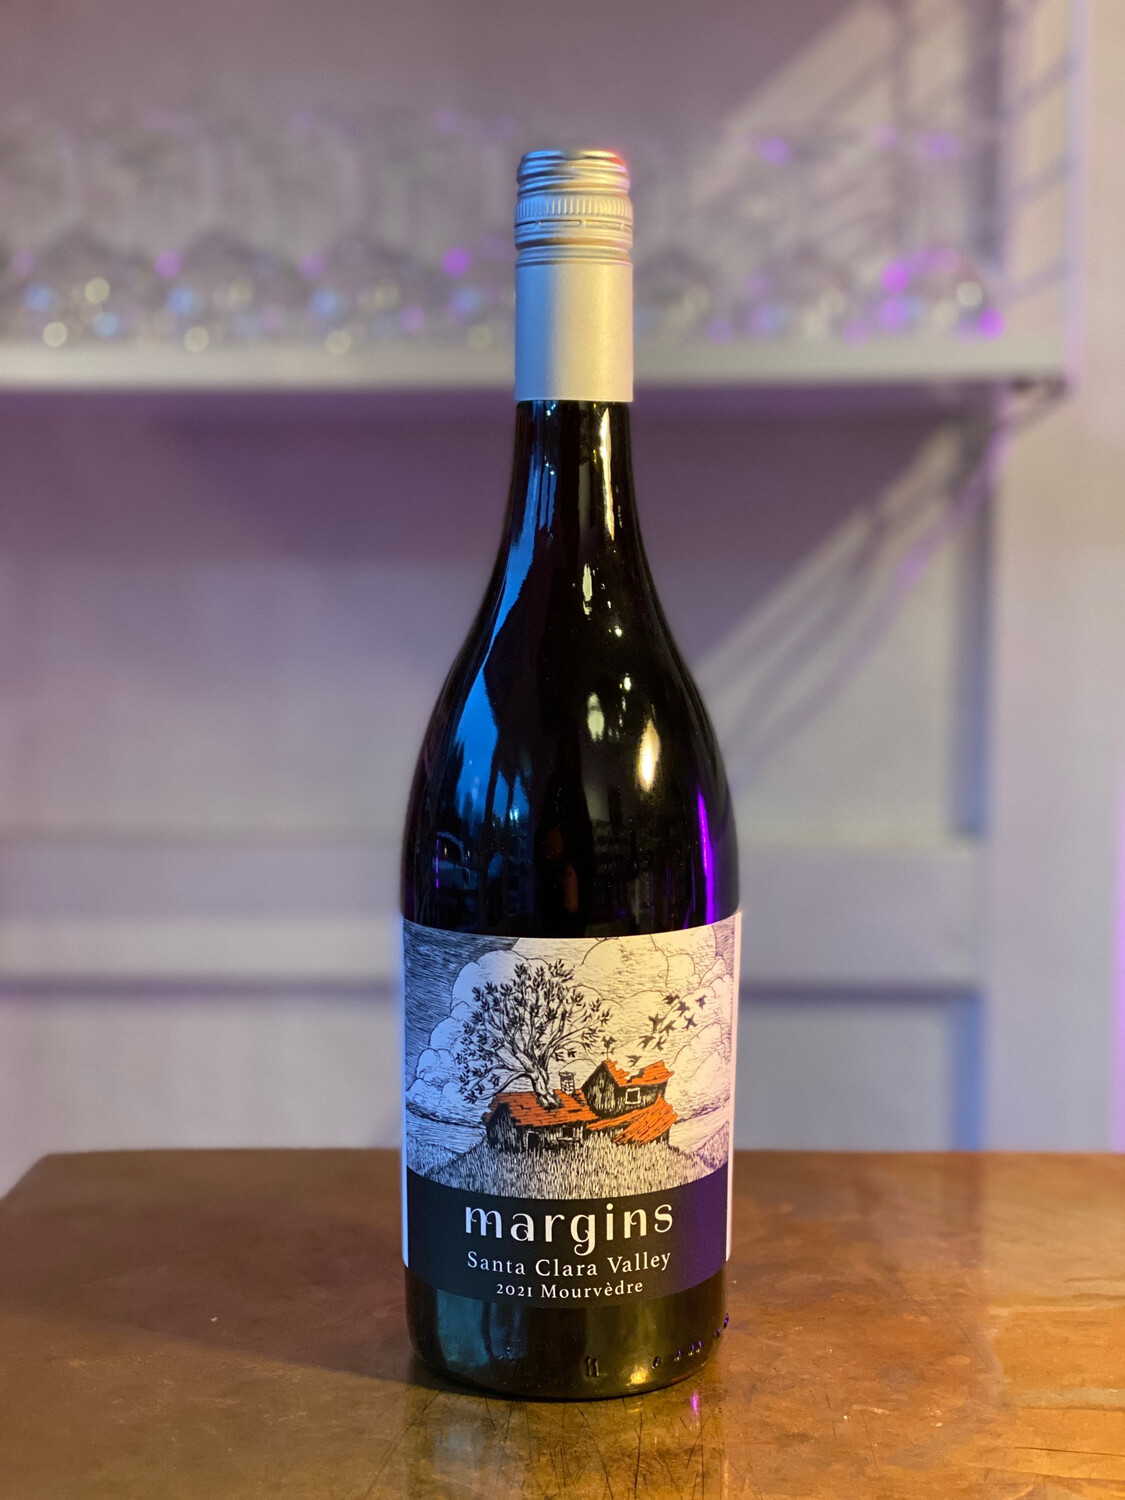 Margins Wine, Pinot Noir Santa Cruz Mountains (2021)